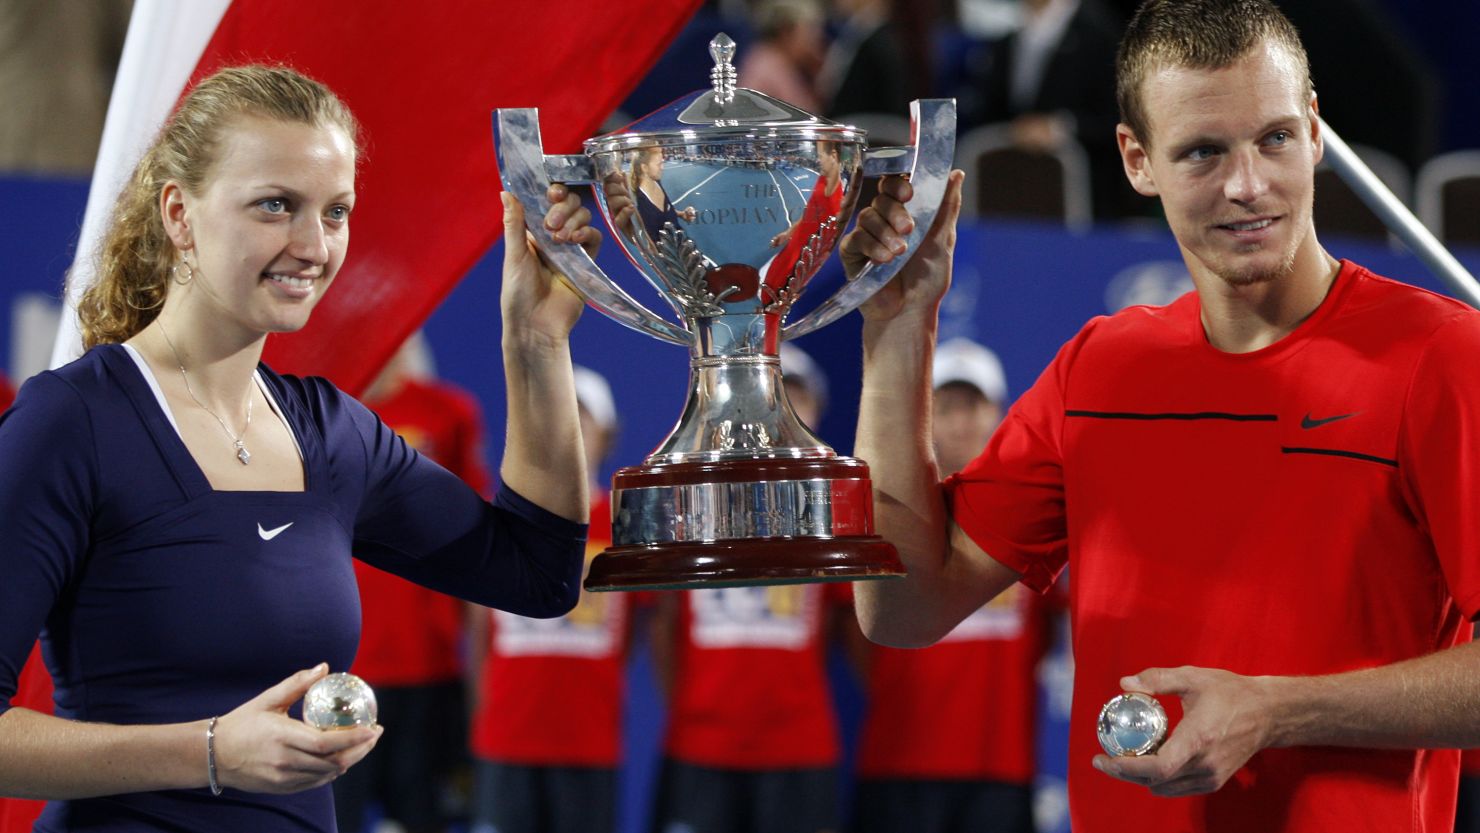 Czech tennis stars Petra Kvitova, left, and Tomas Berdych celebrate winning the Hopman Cup in Perth on Saturday.